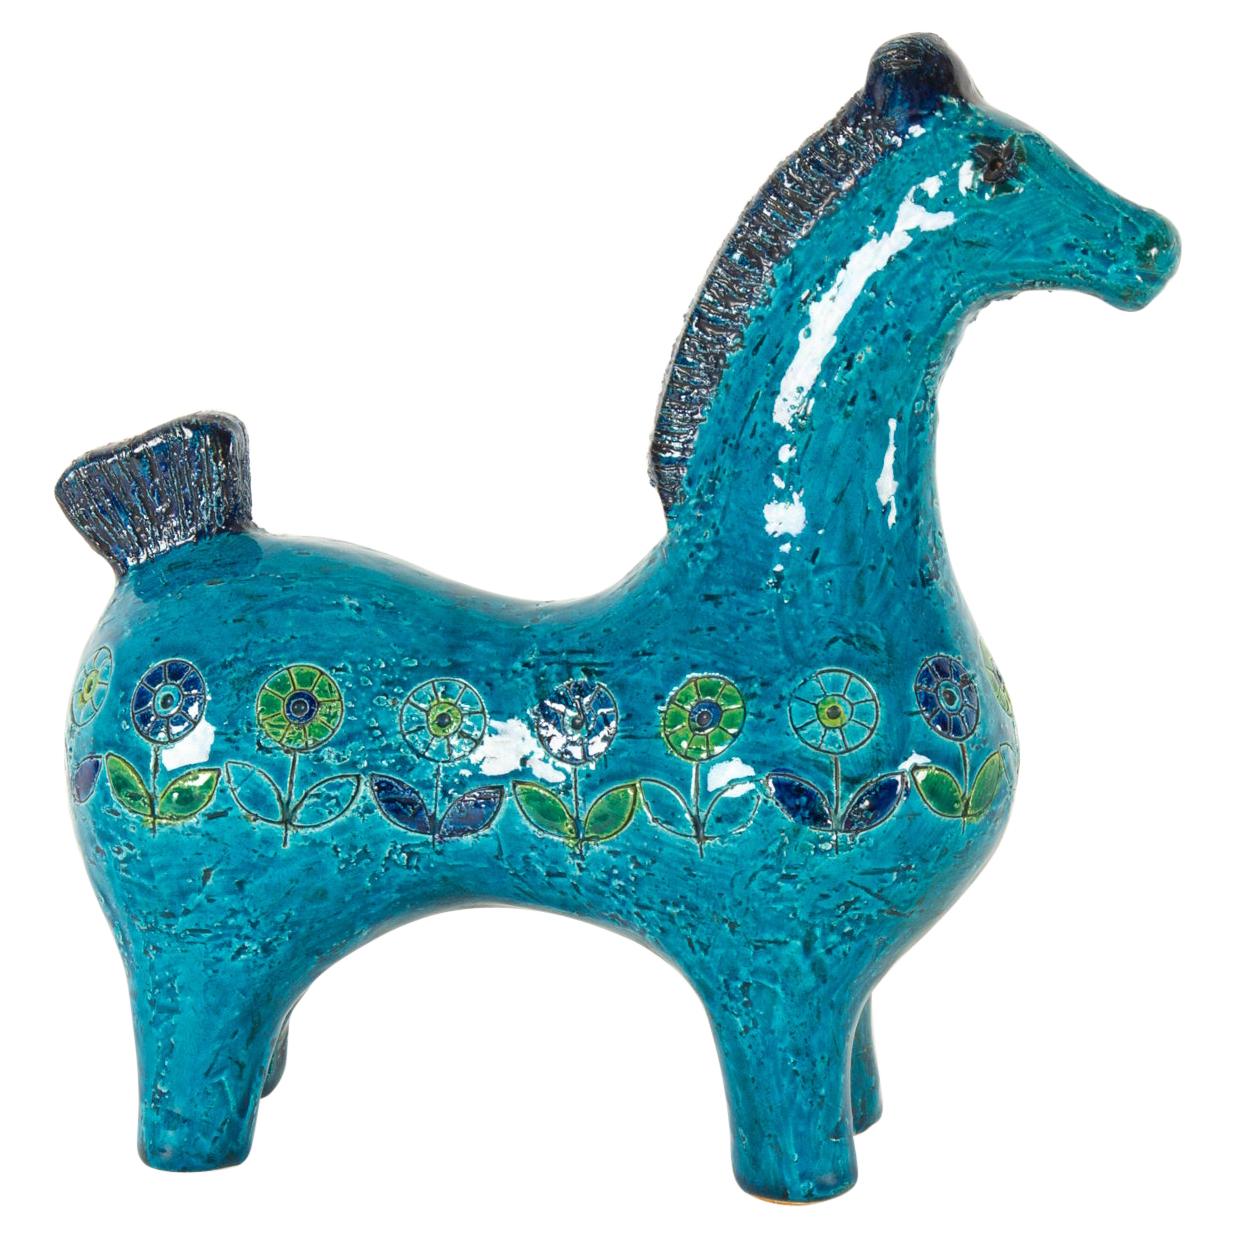 Vintage Italian Ceramic Horse Figurine by Aldo Londi for Bitossi, 1960s